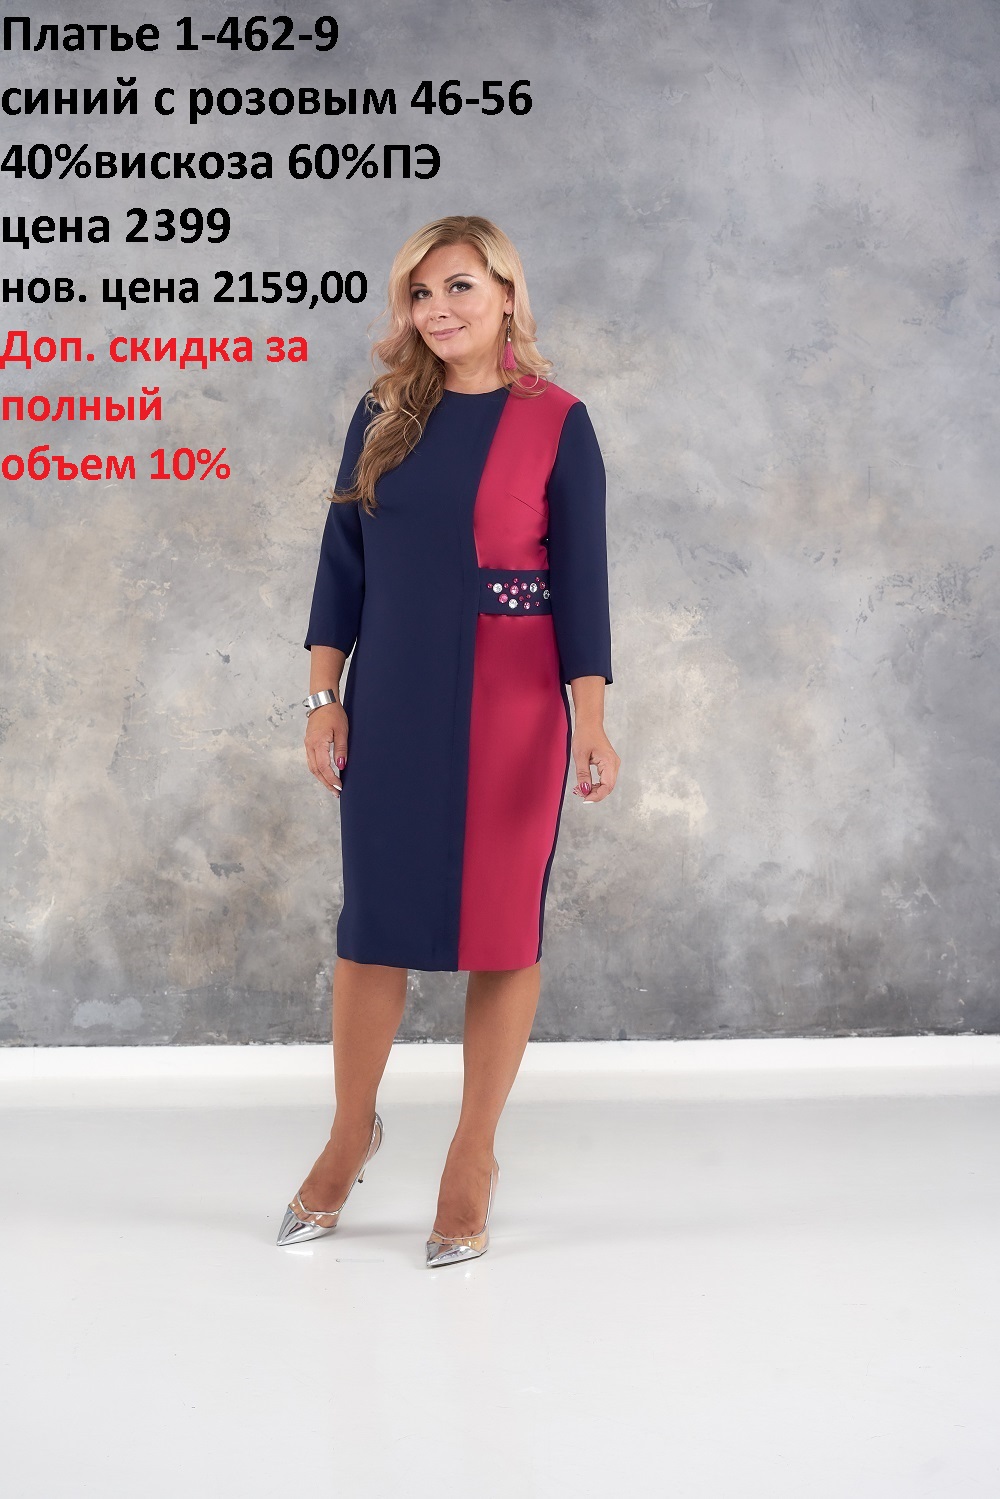 Платье 1-462-9 синий с розовым 46-56 40 вискоза 60 ПЭ стар. цена 2399,00 нов. цена 2159,00